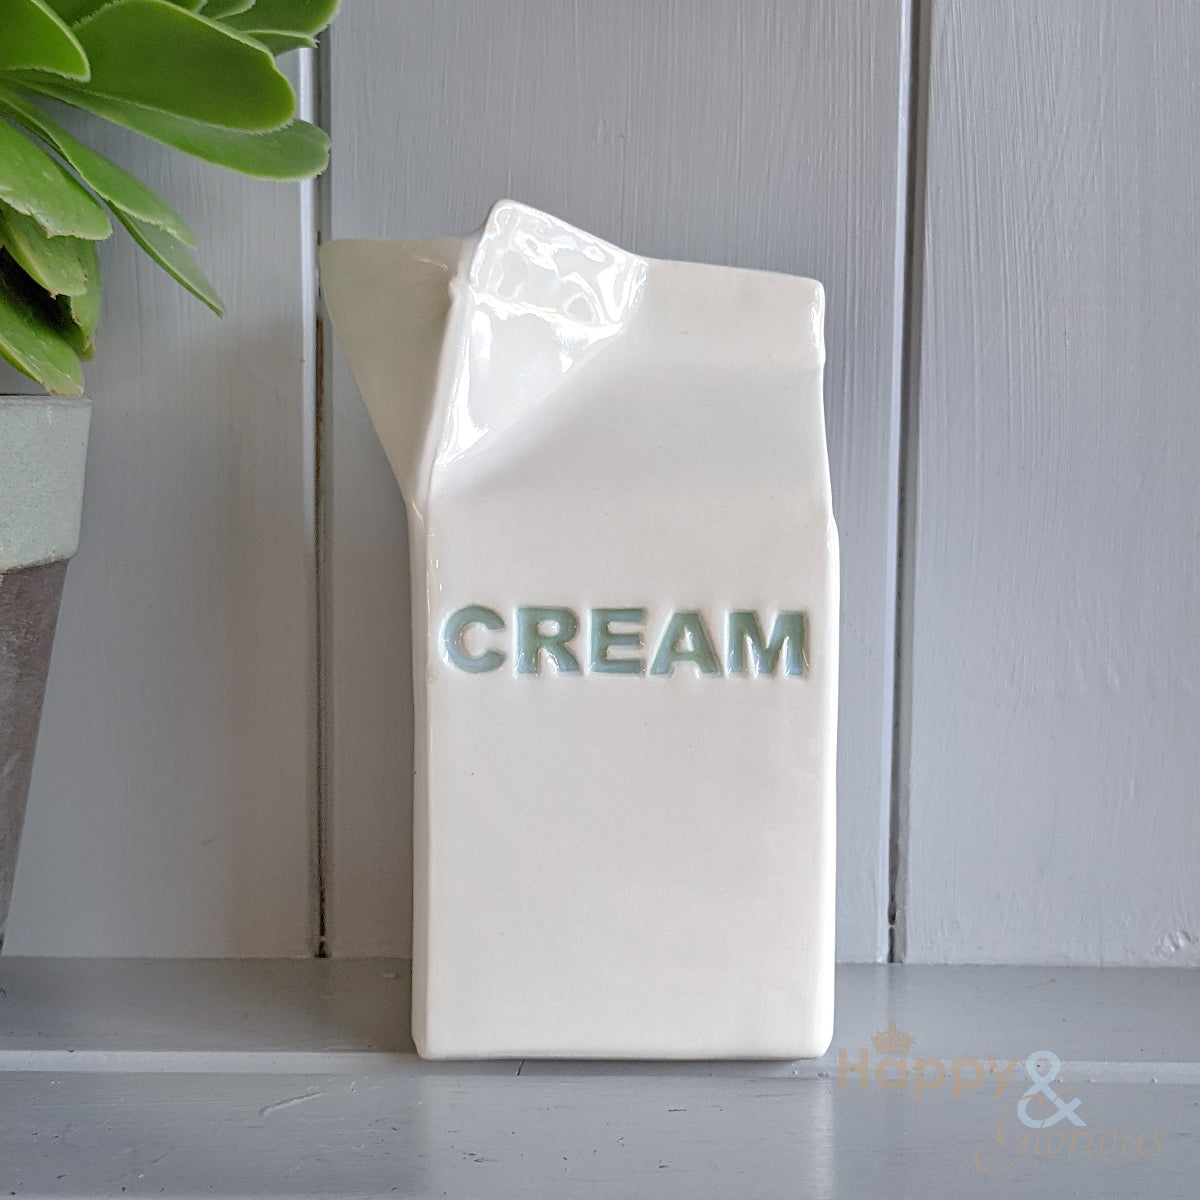 Green ceramic cream carton jug